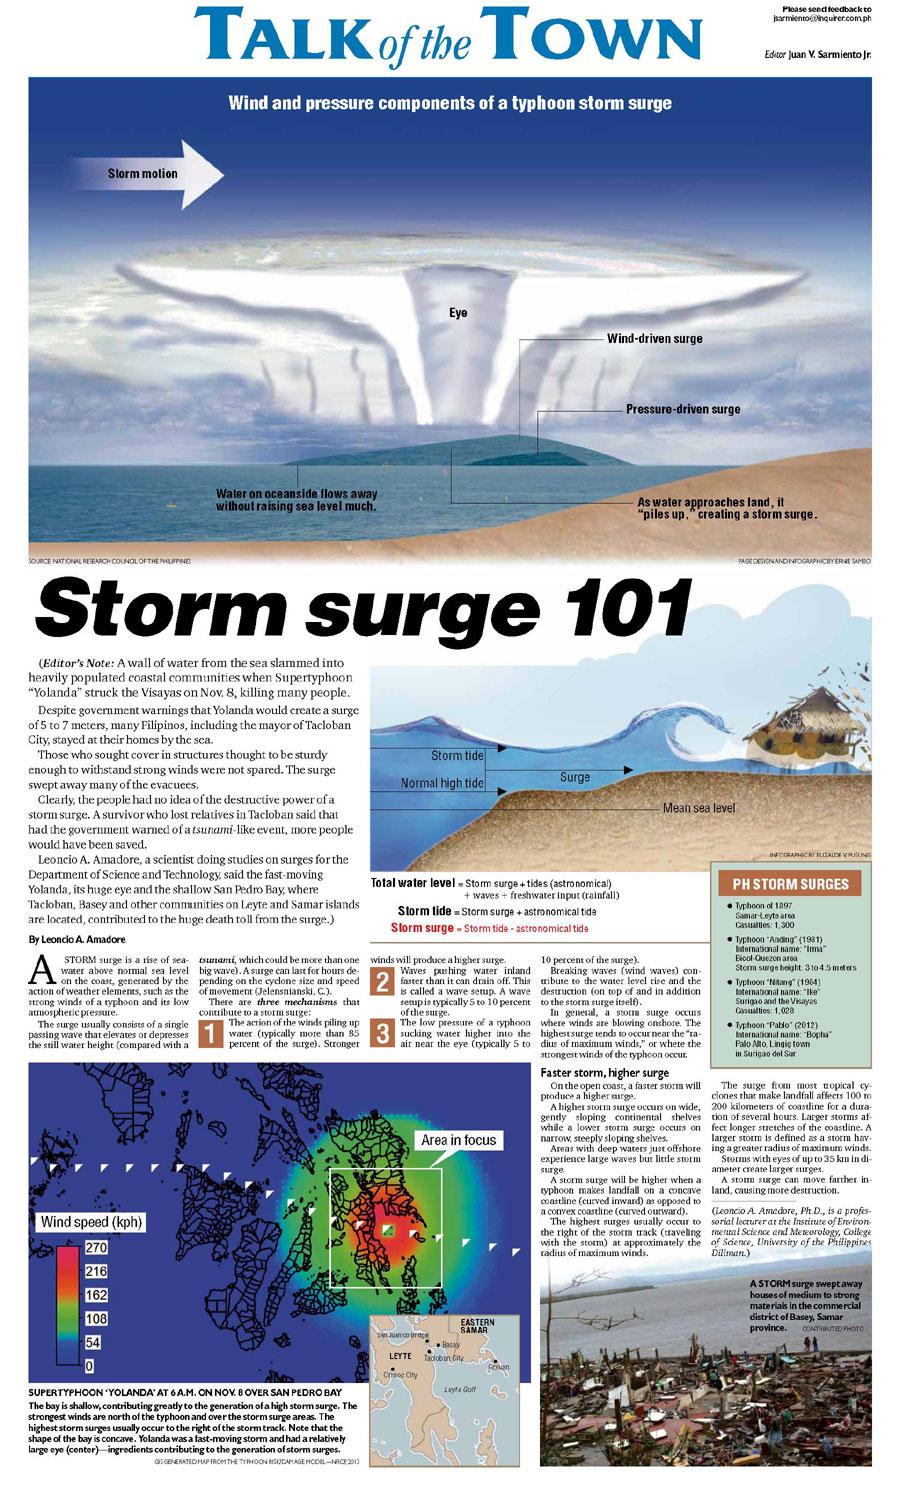 Storm surge contributing factors intensity